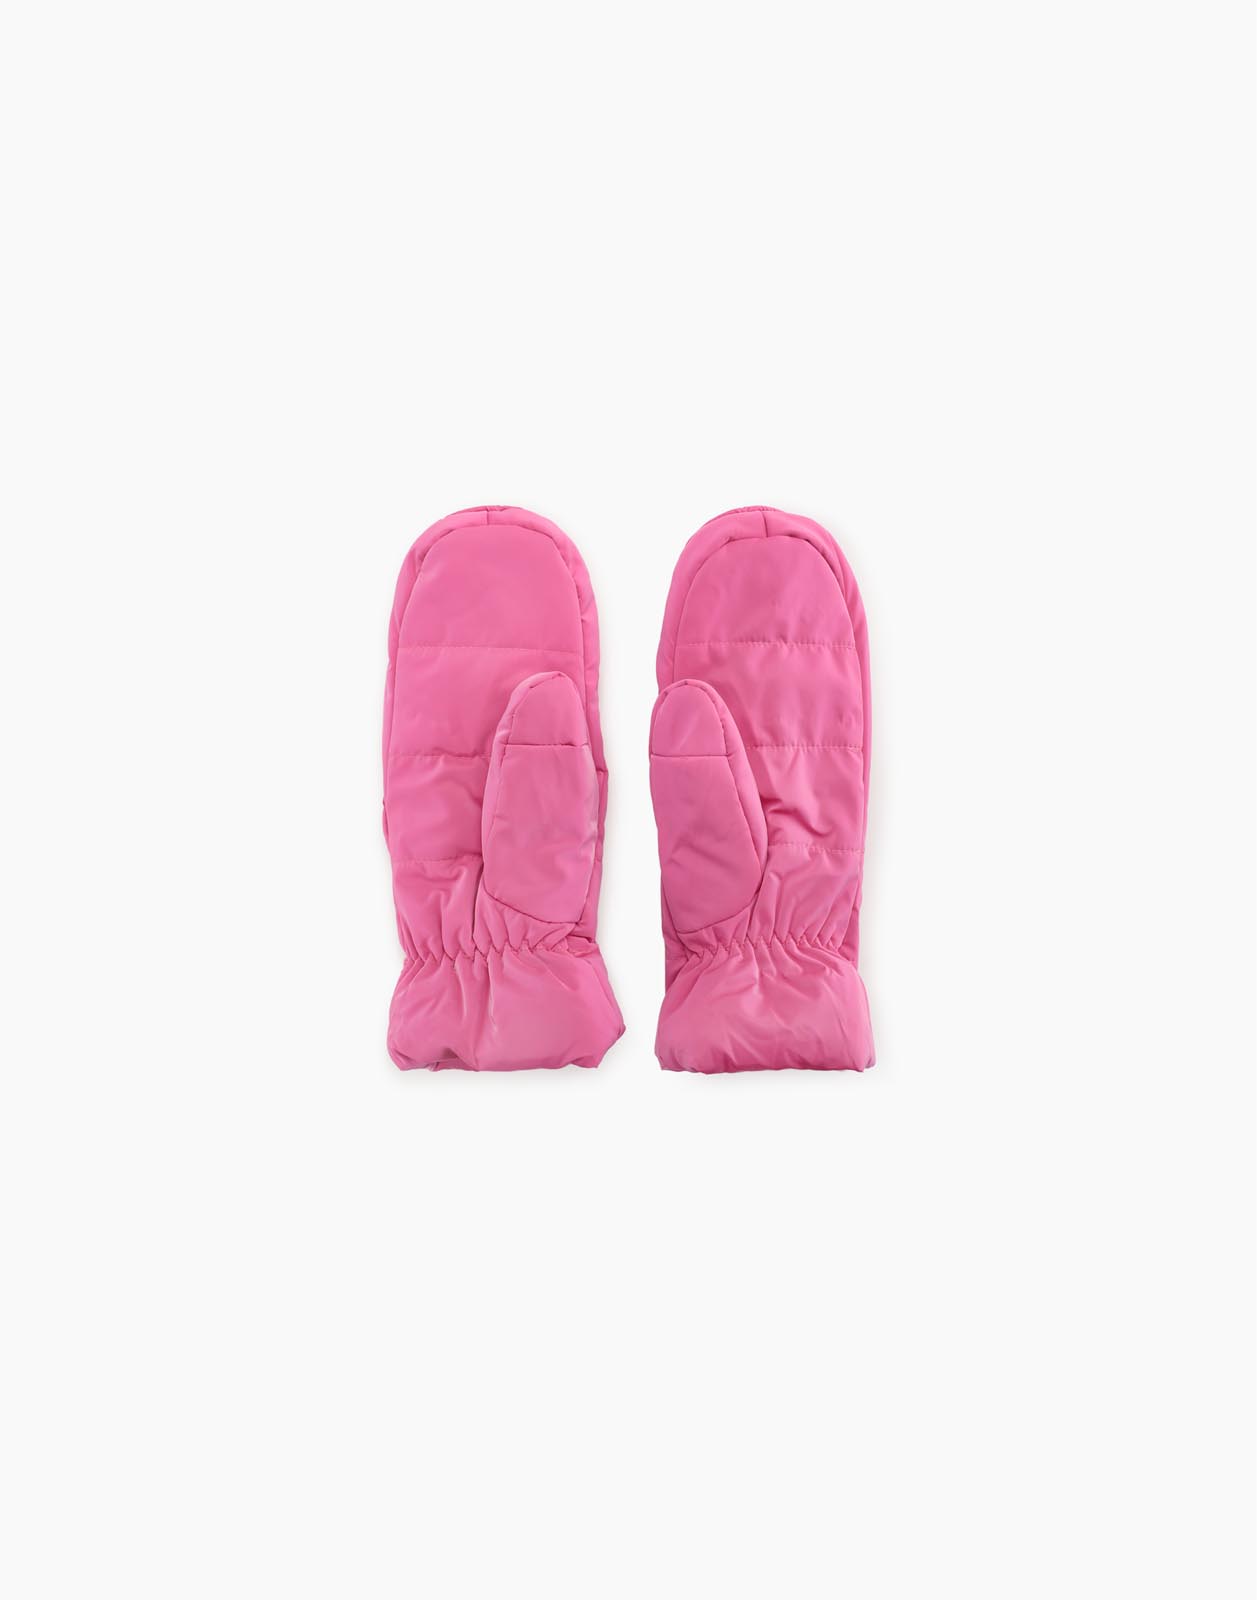 Варежки Gloria Jeans GAS012322 ярко-розовый 6-8л/0 варежки therm ic 2019 20 warmer ready junior розовый inch дюйм 4 5